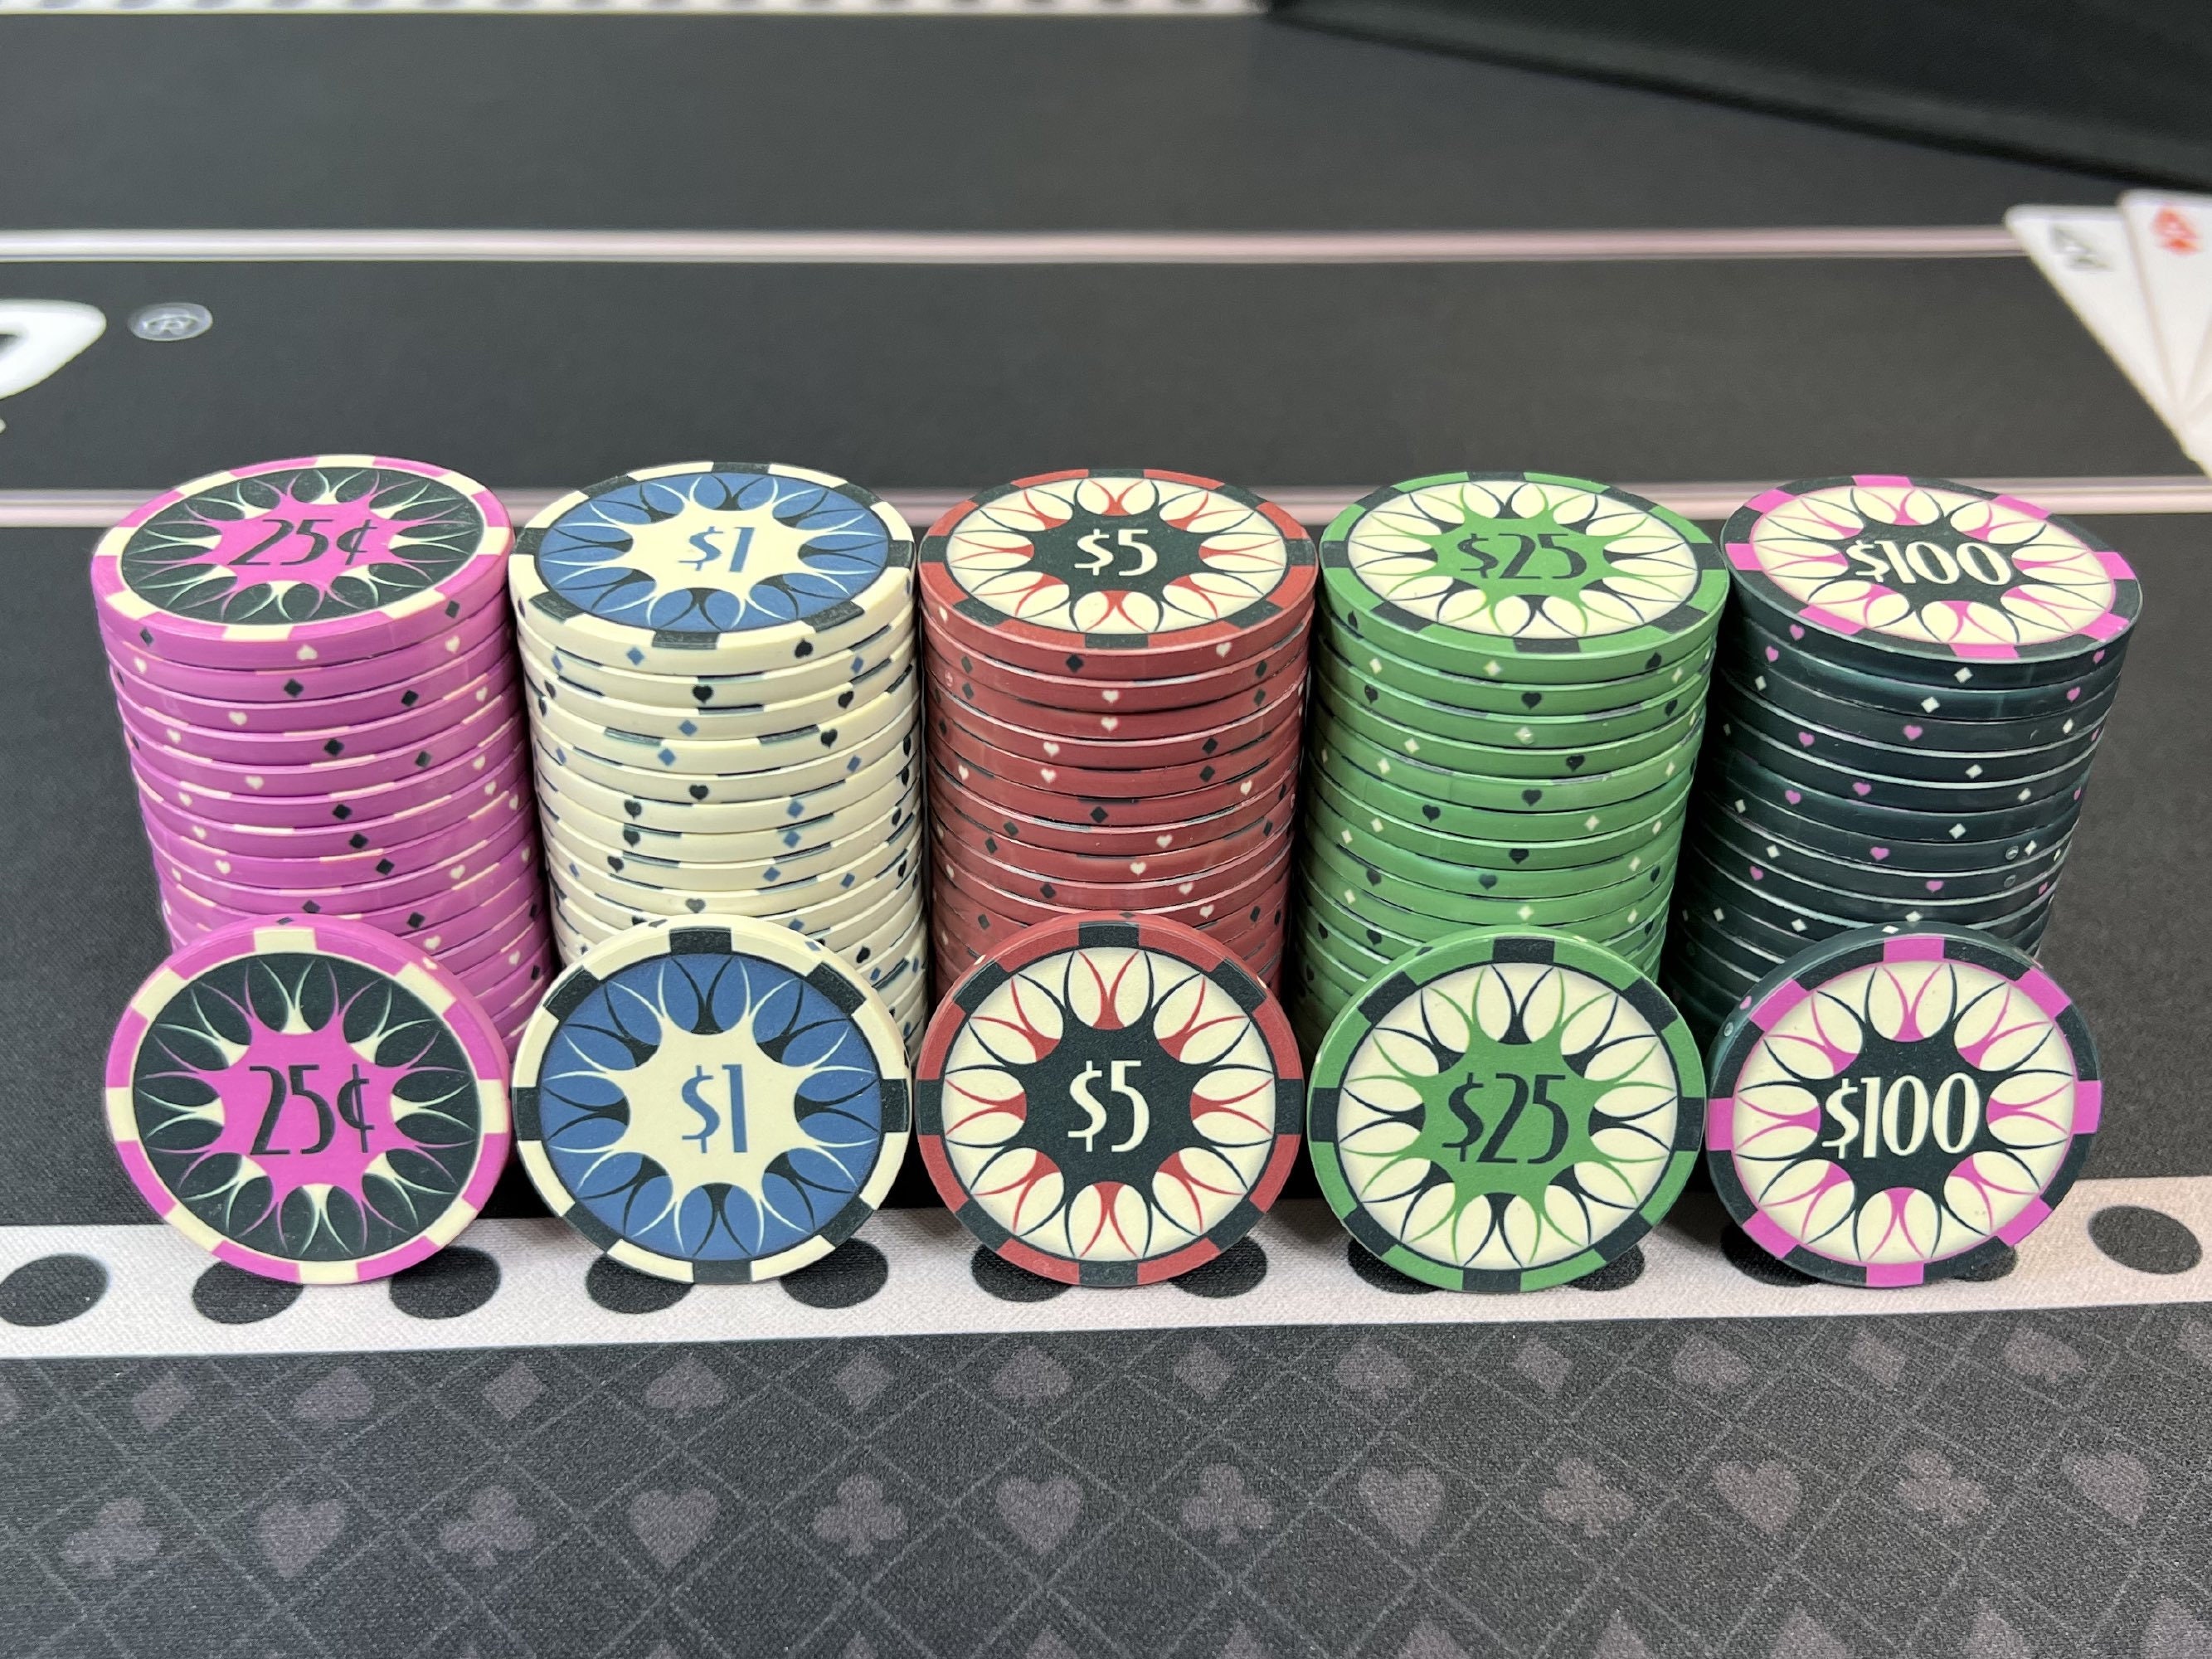 Luxury Sculpture Texas Hold'em Poker Chips Set Ceramic Material